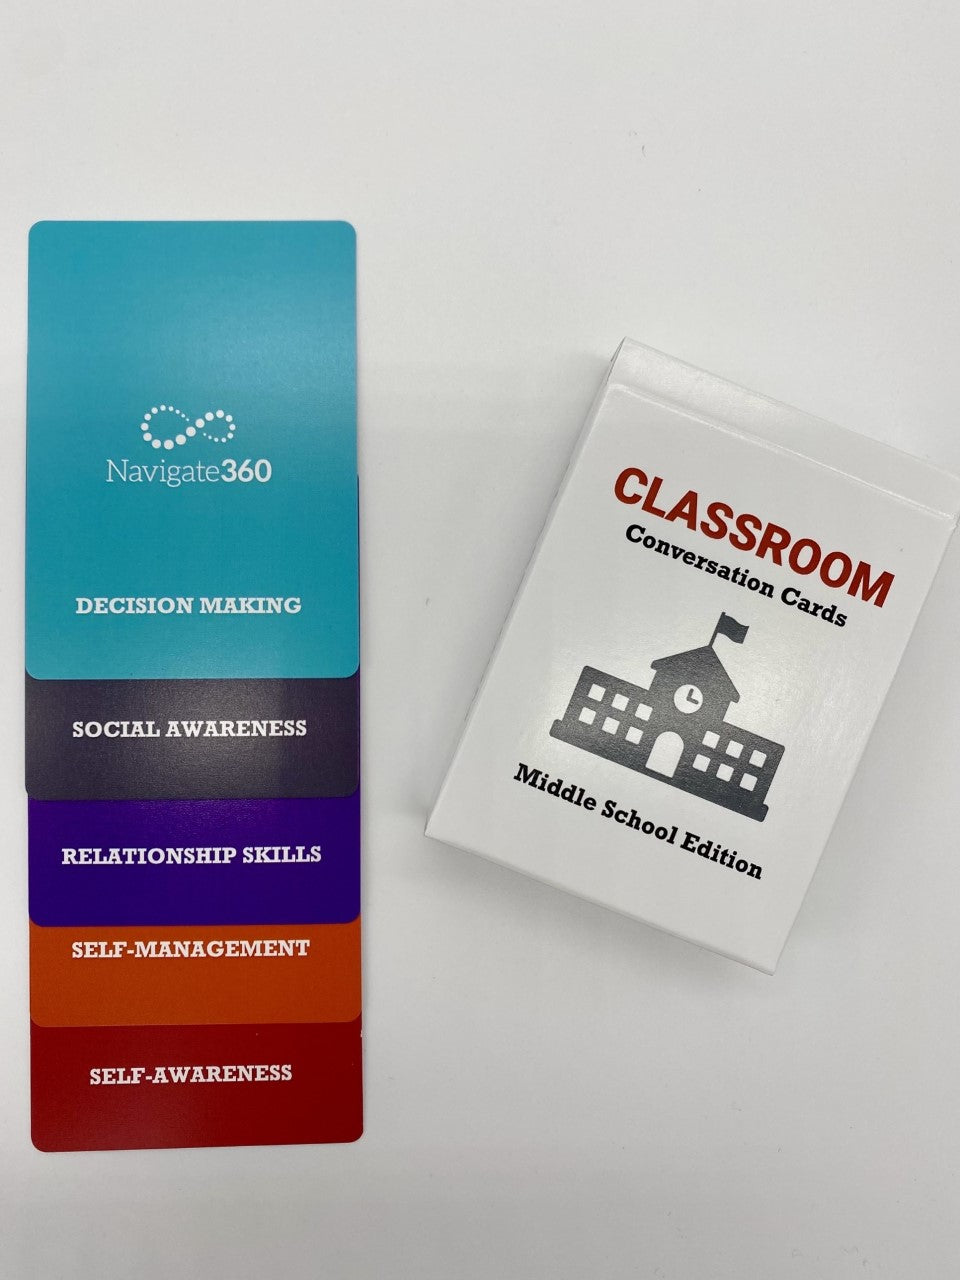 Classroom Communication Cards